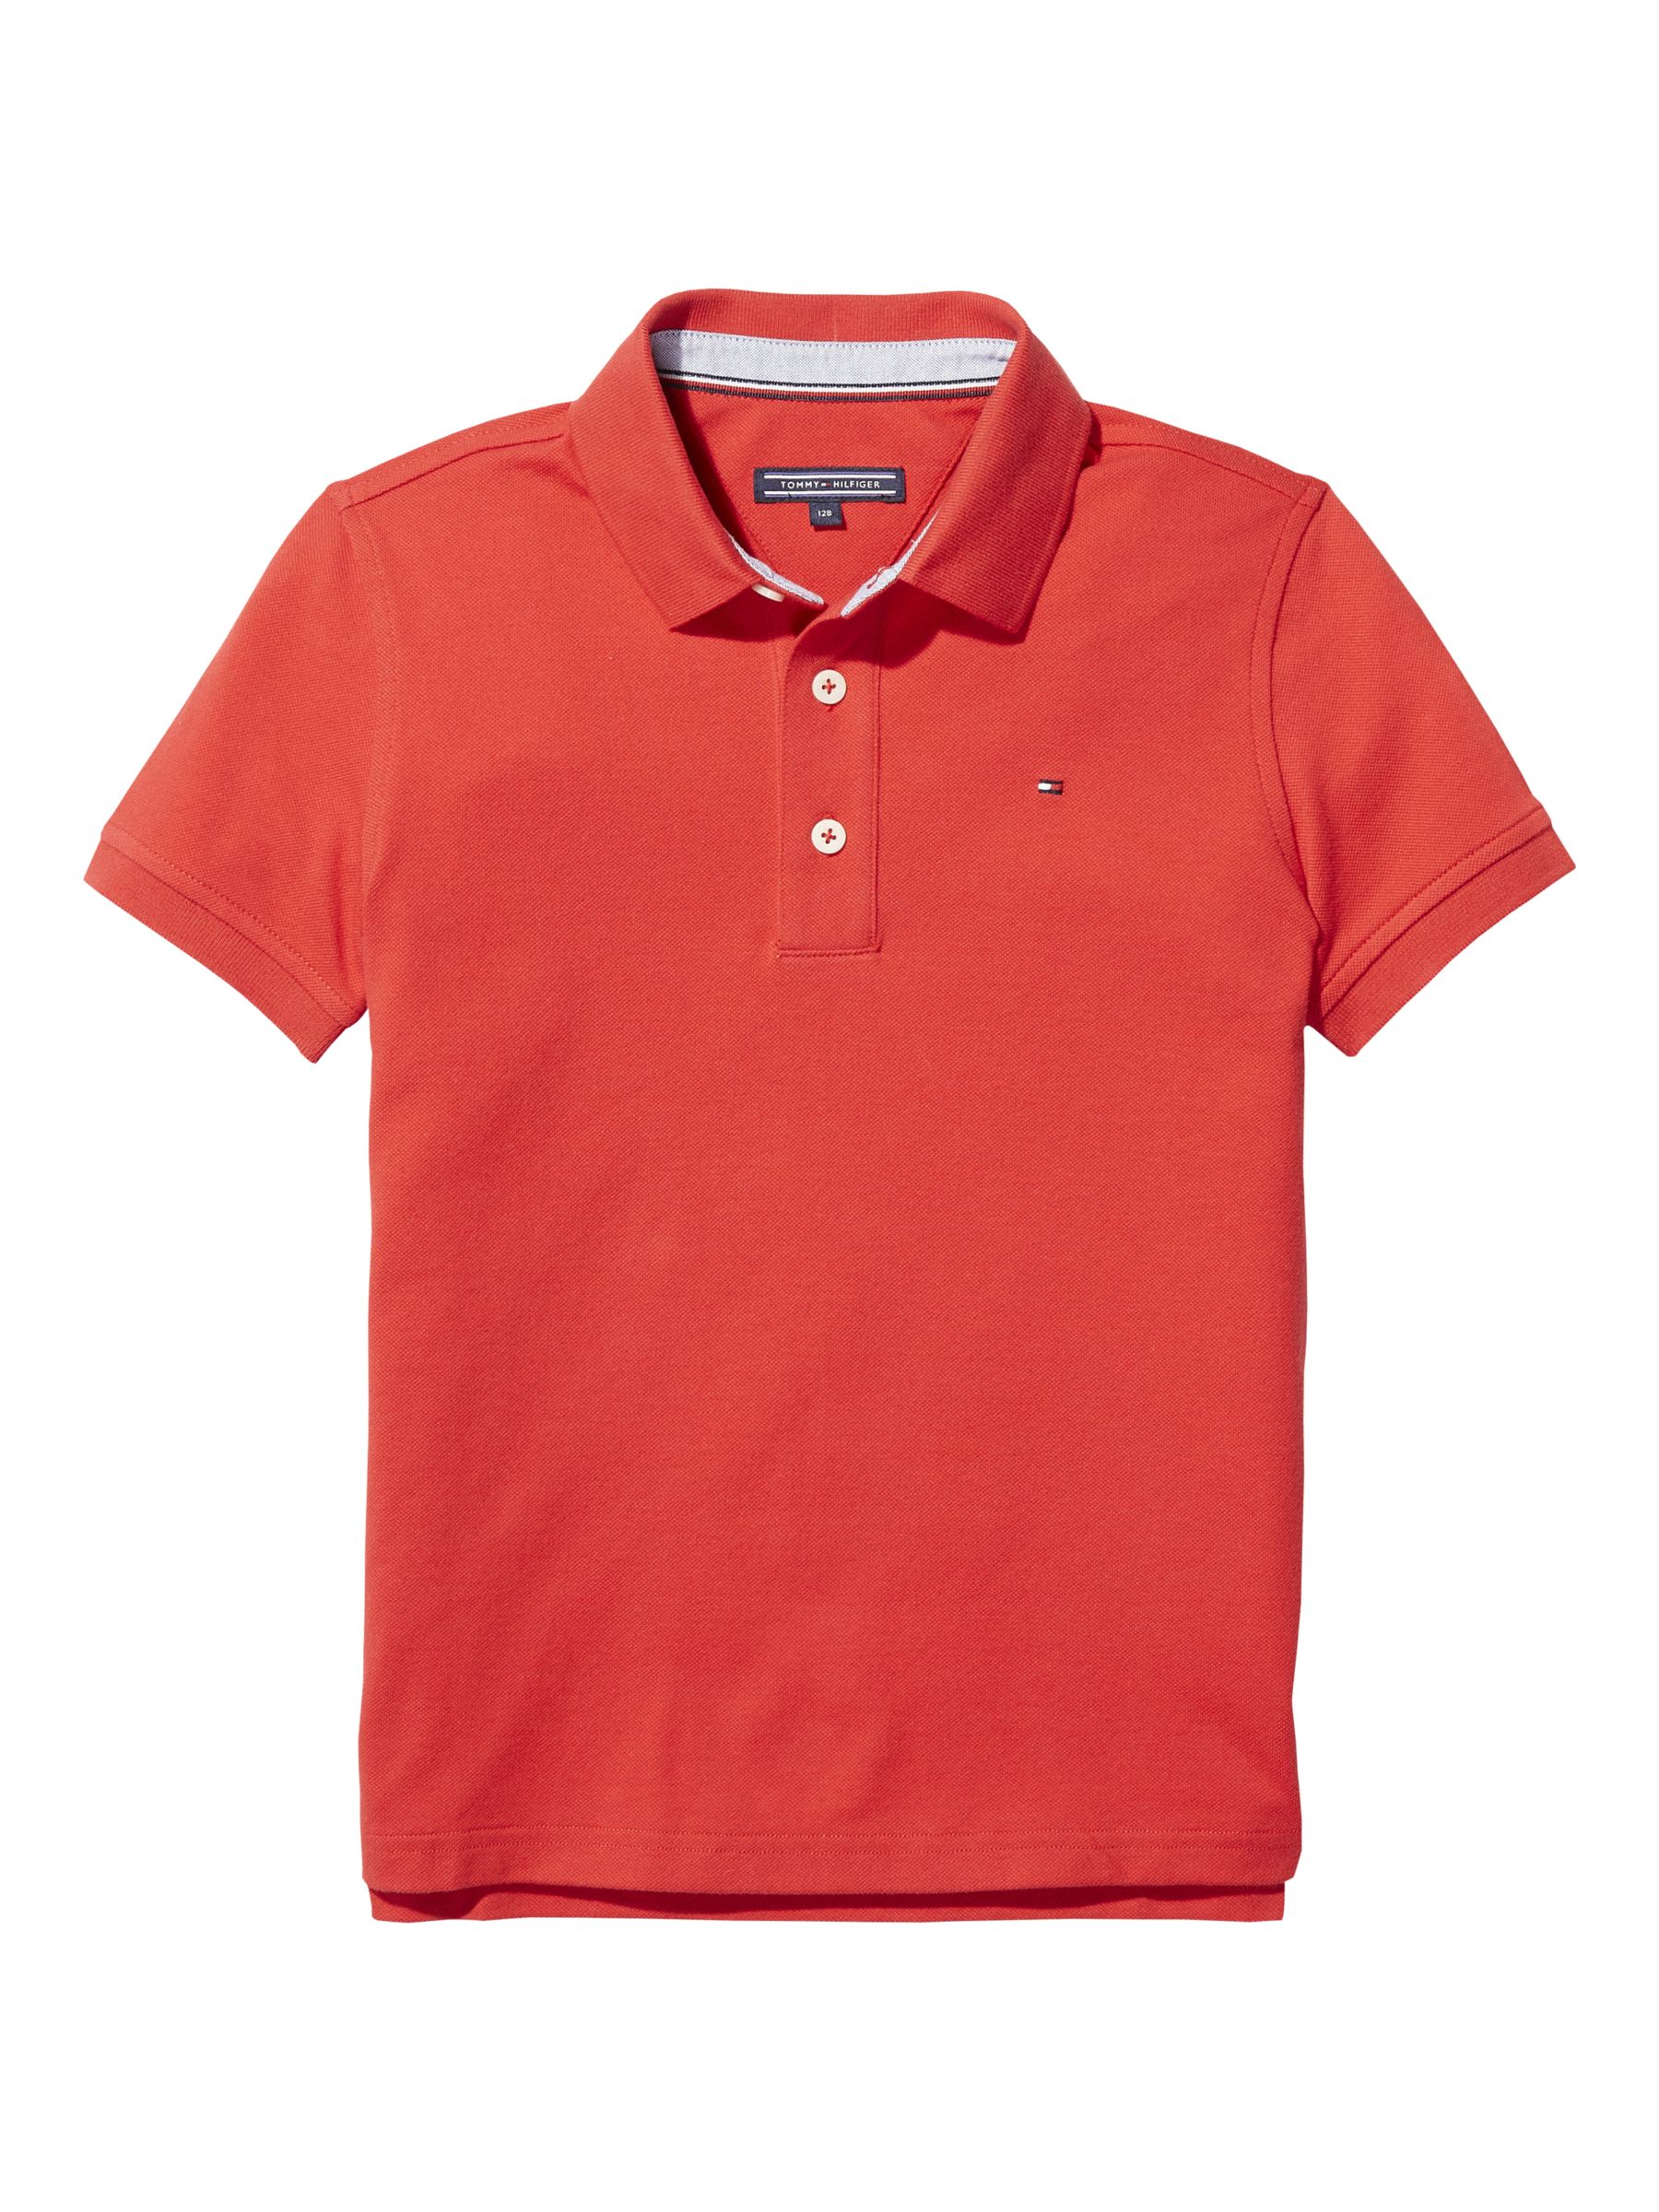 Image of Tommy Hilfiger Boys Organic Cotton Short Sleeve Polo Shirt